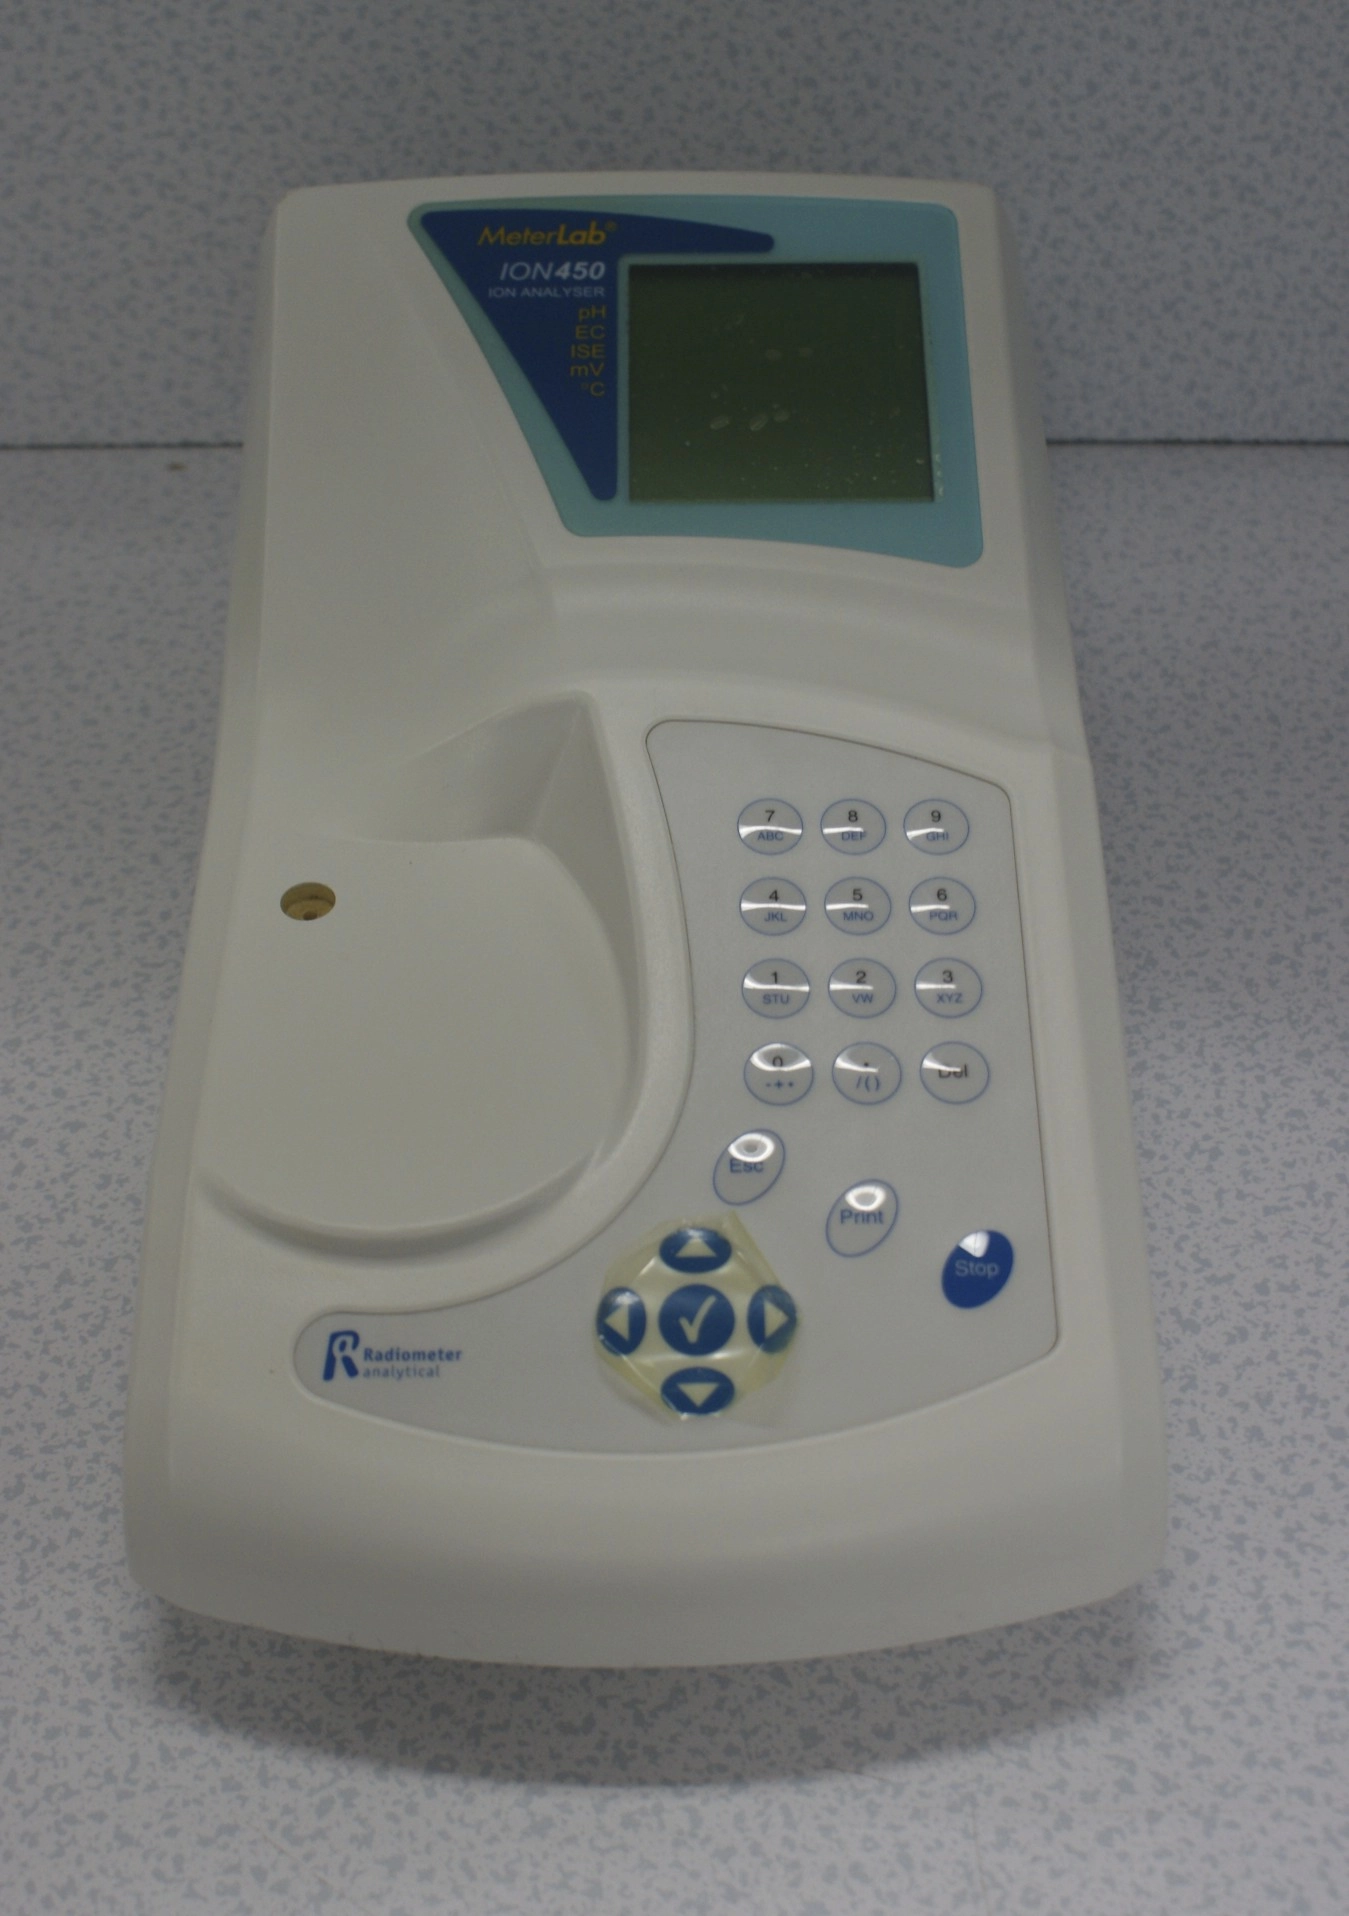 Radiometer Analytical ION 450 METERLAB ION450 MeterLab ION450 Ba pH/EC/ISE Benchtop Meter used like new condition